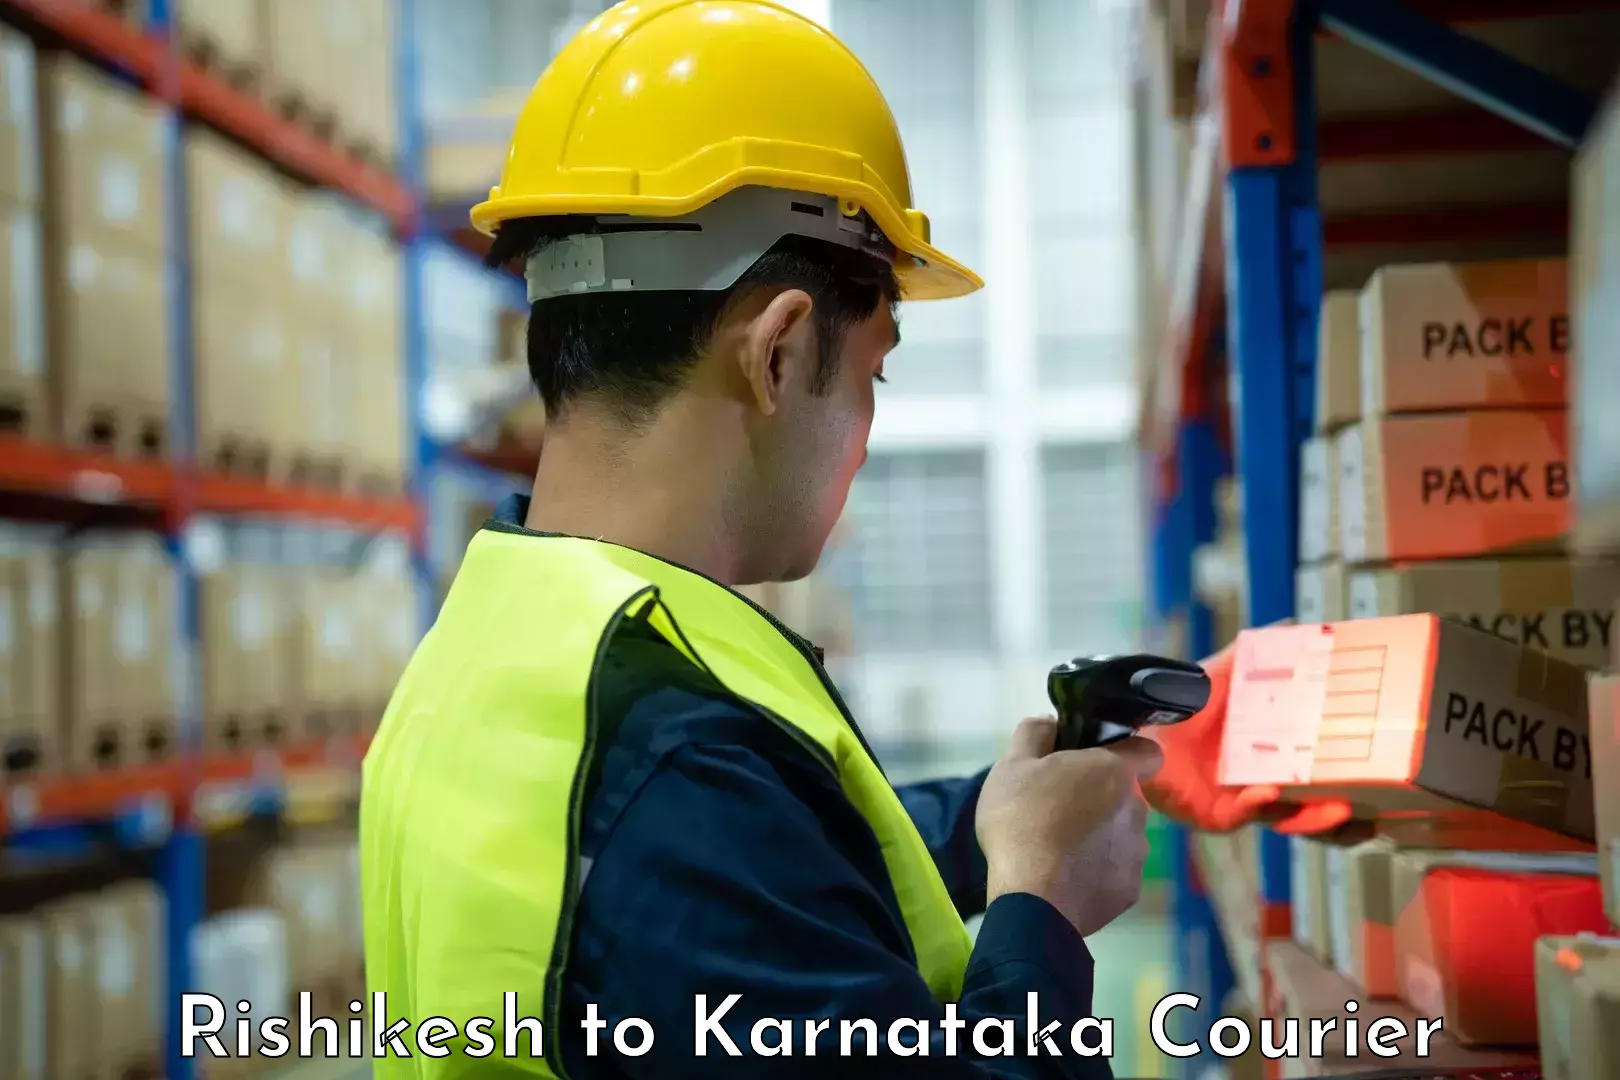 Professional moving company Rishikesh to Kanjarakatte